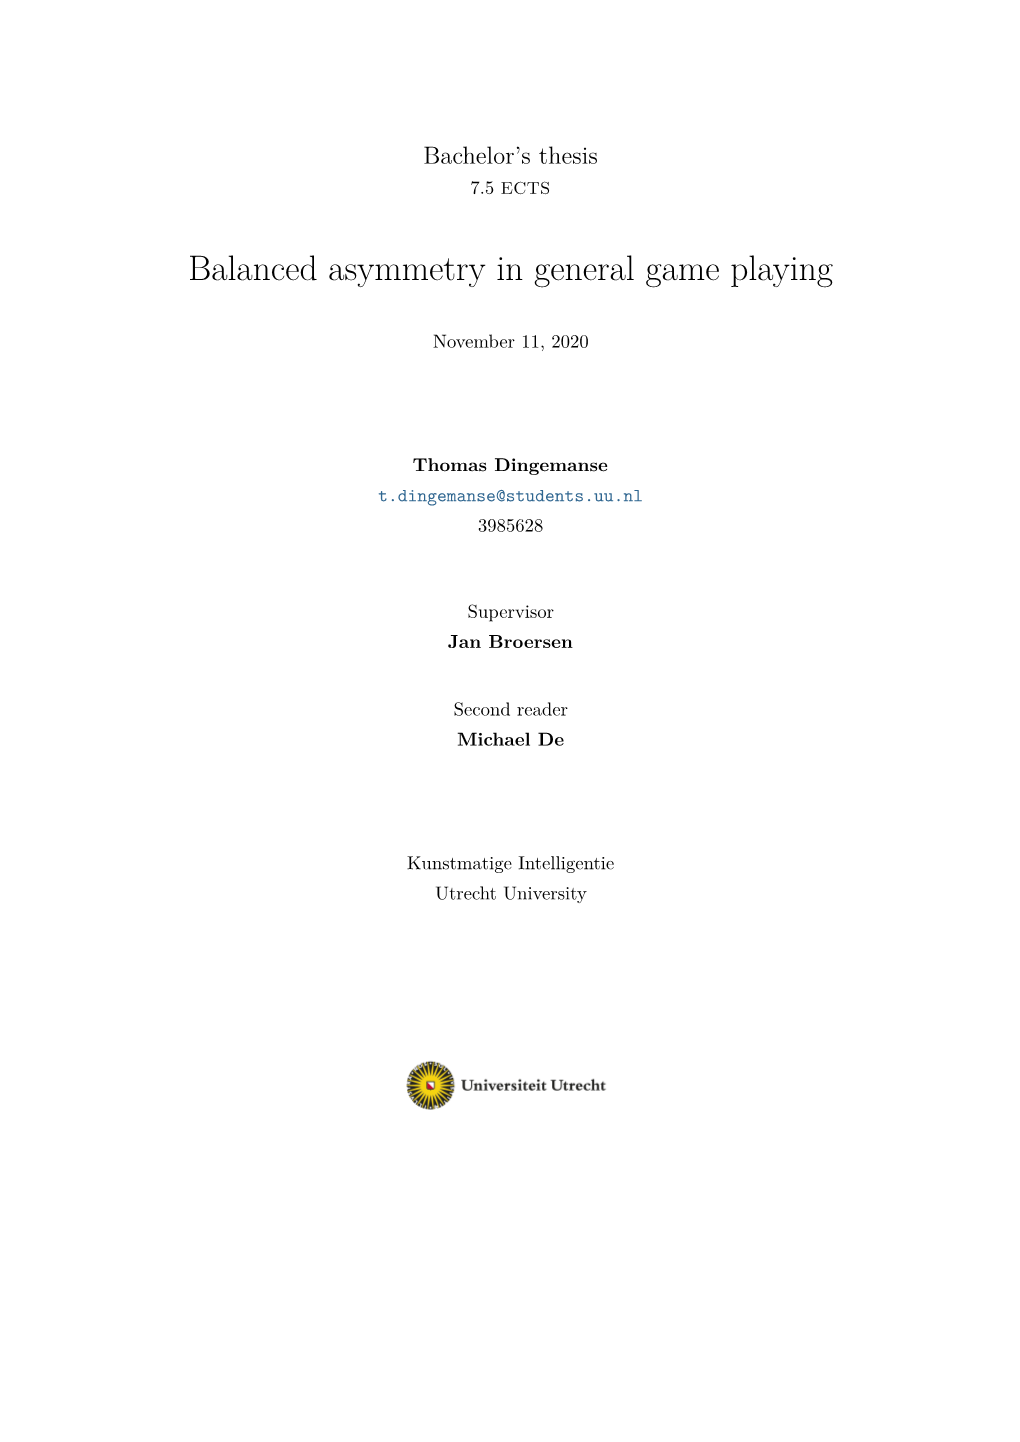 Balanced Asymmetry in General Game Playing